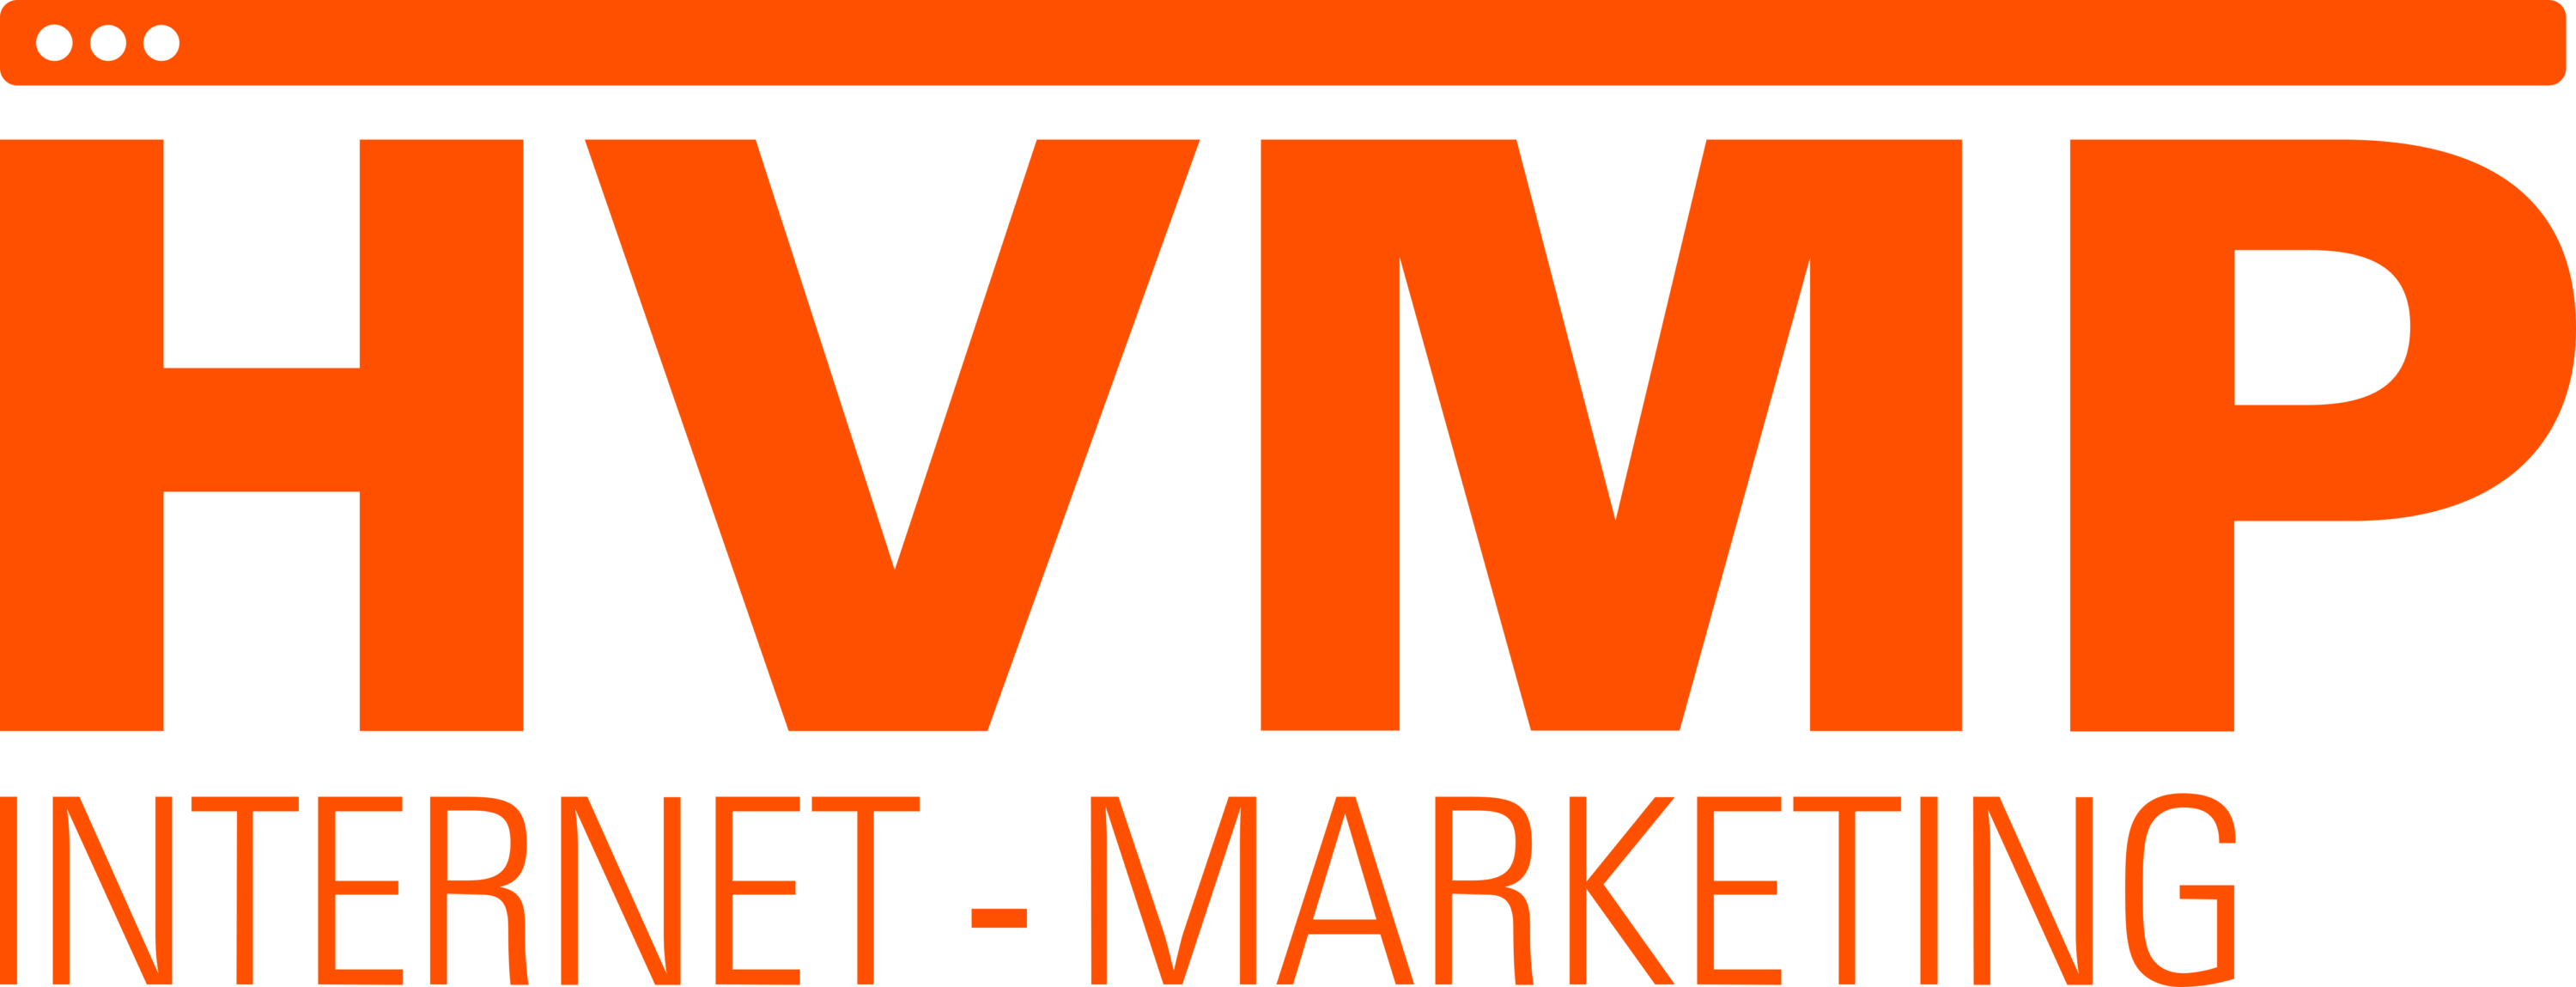 HVMP Internet Marketing Logo